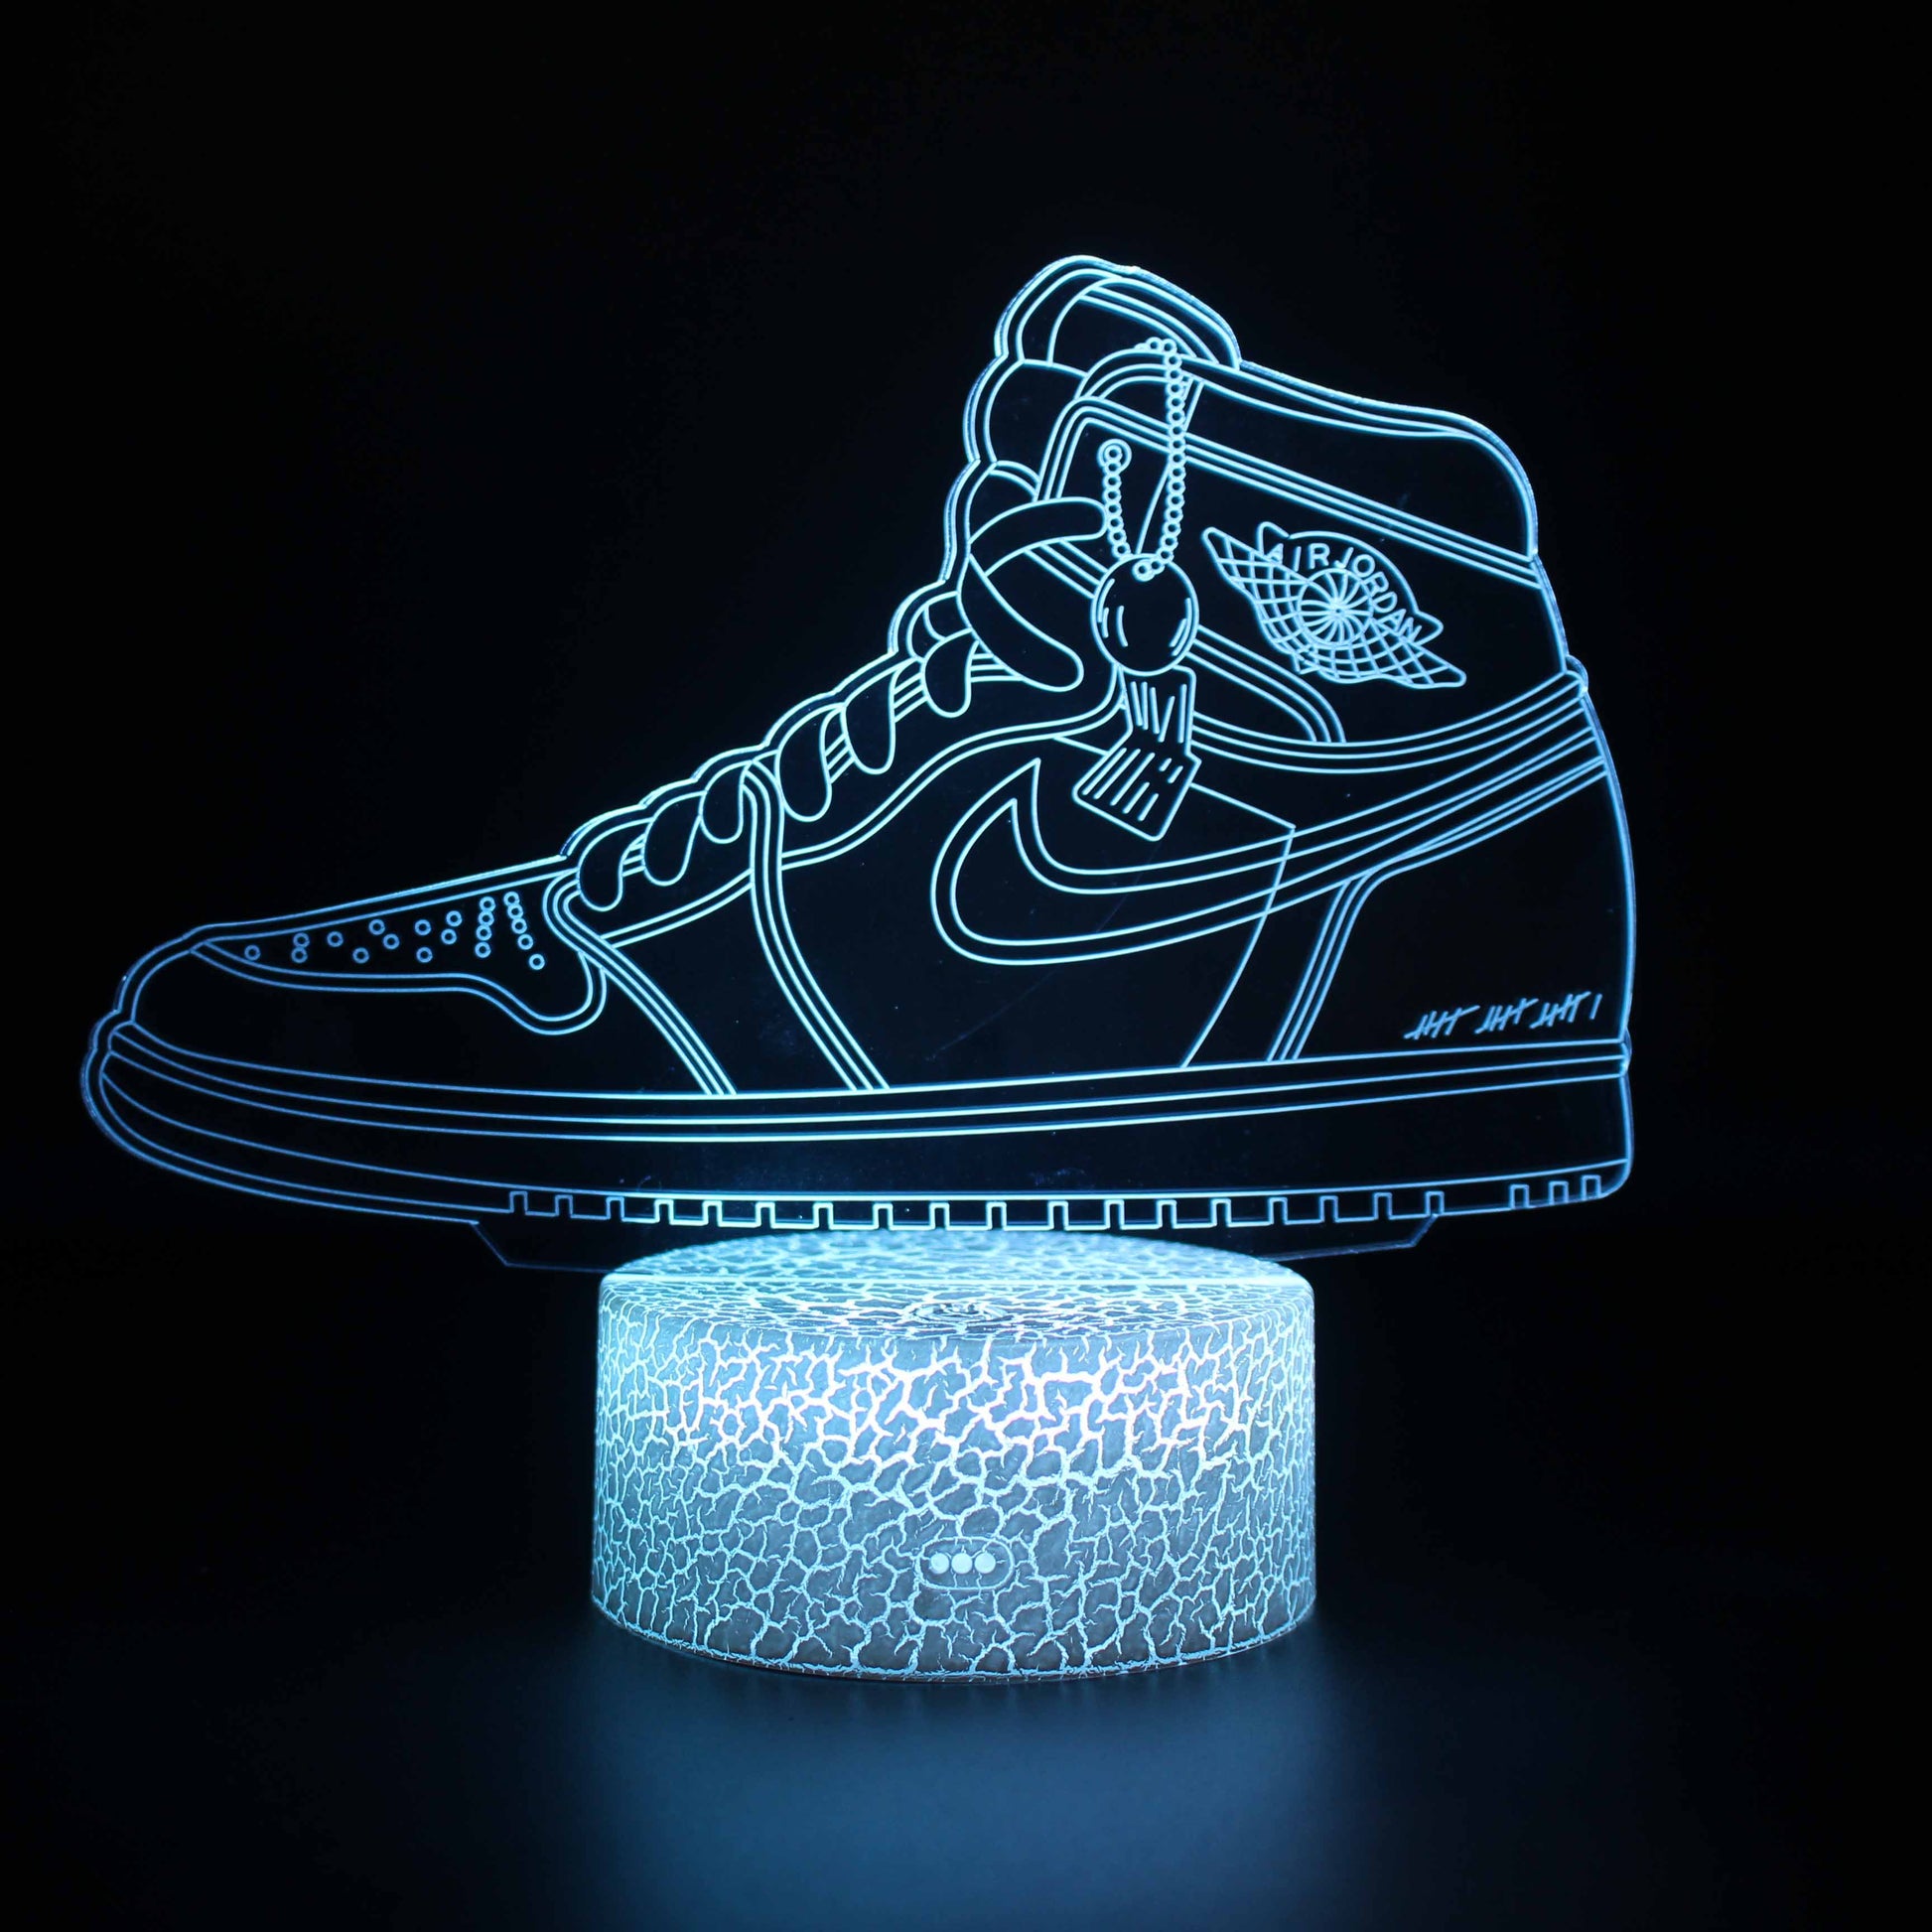 Basketball Shoes Model 3D Night Light